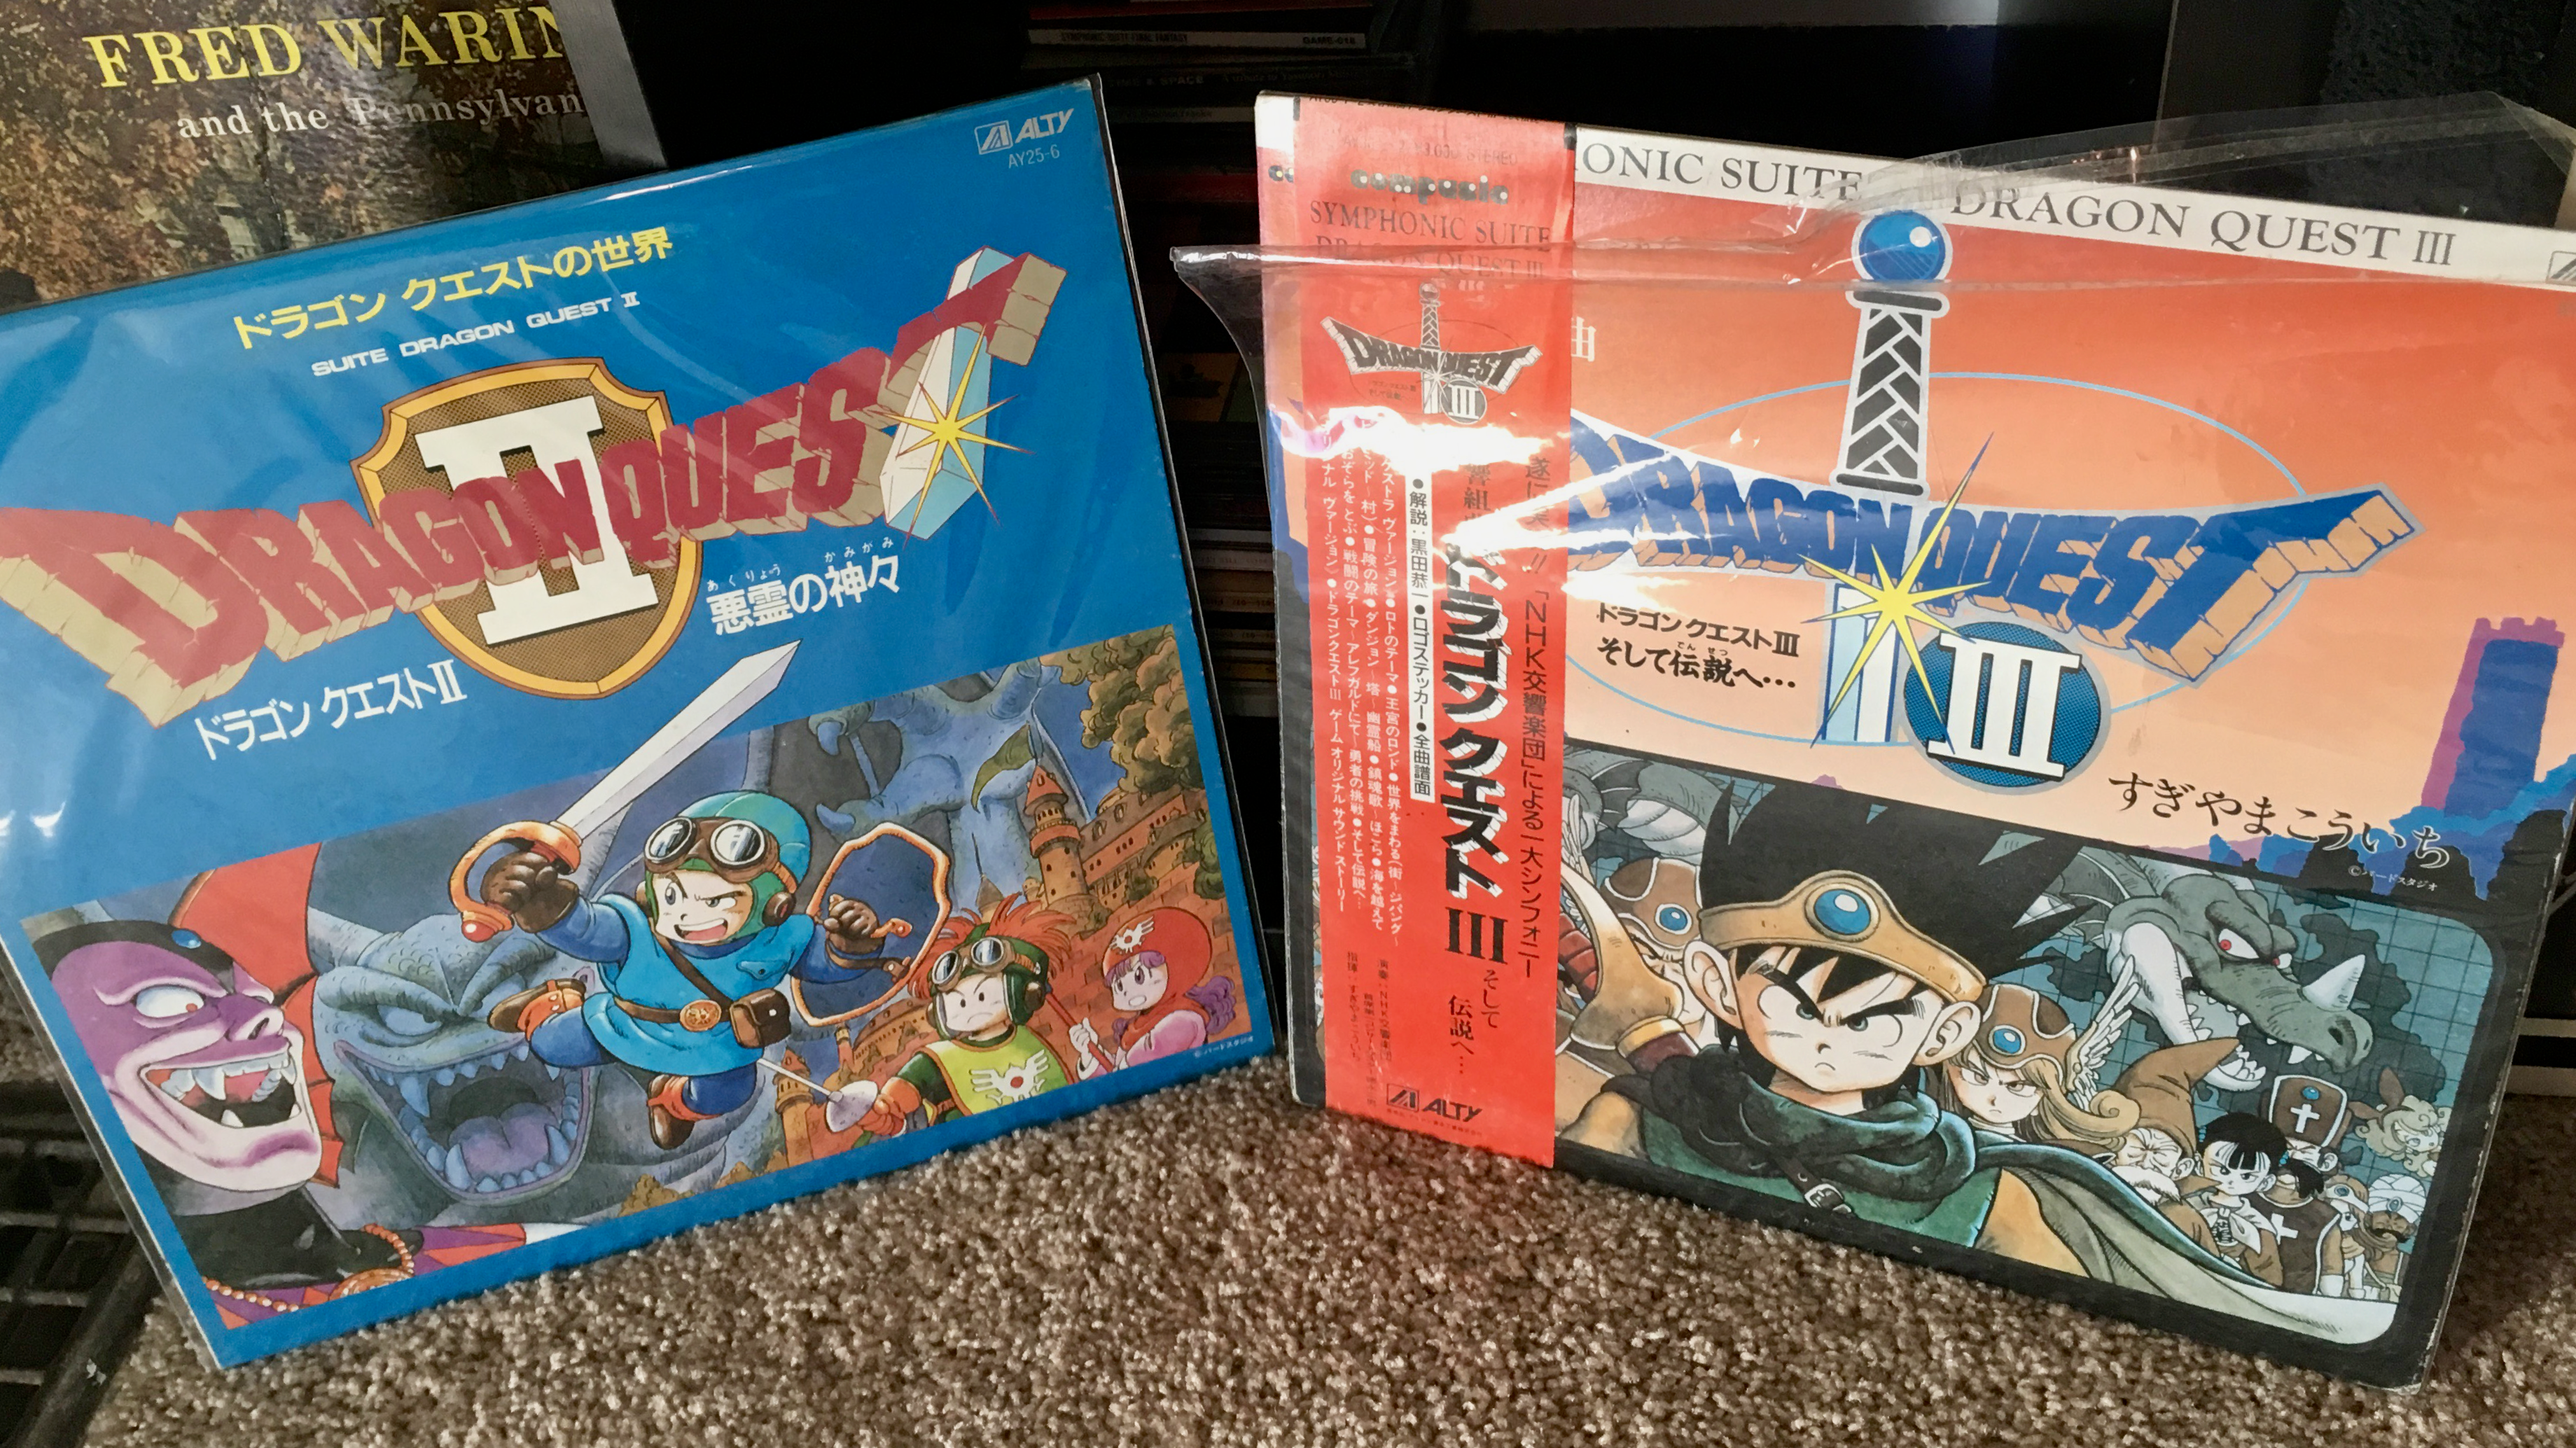 Dragon Quest II and III Symphonic Suites on vinyl